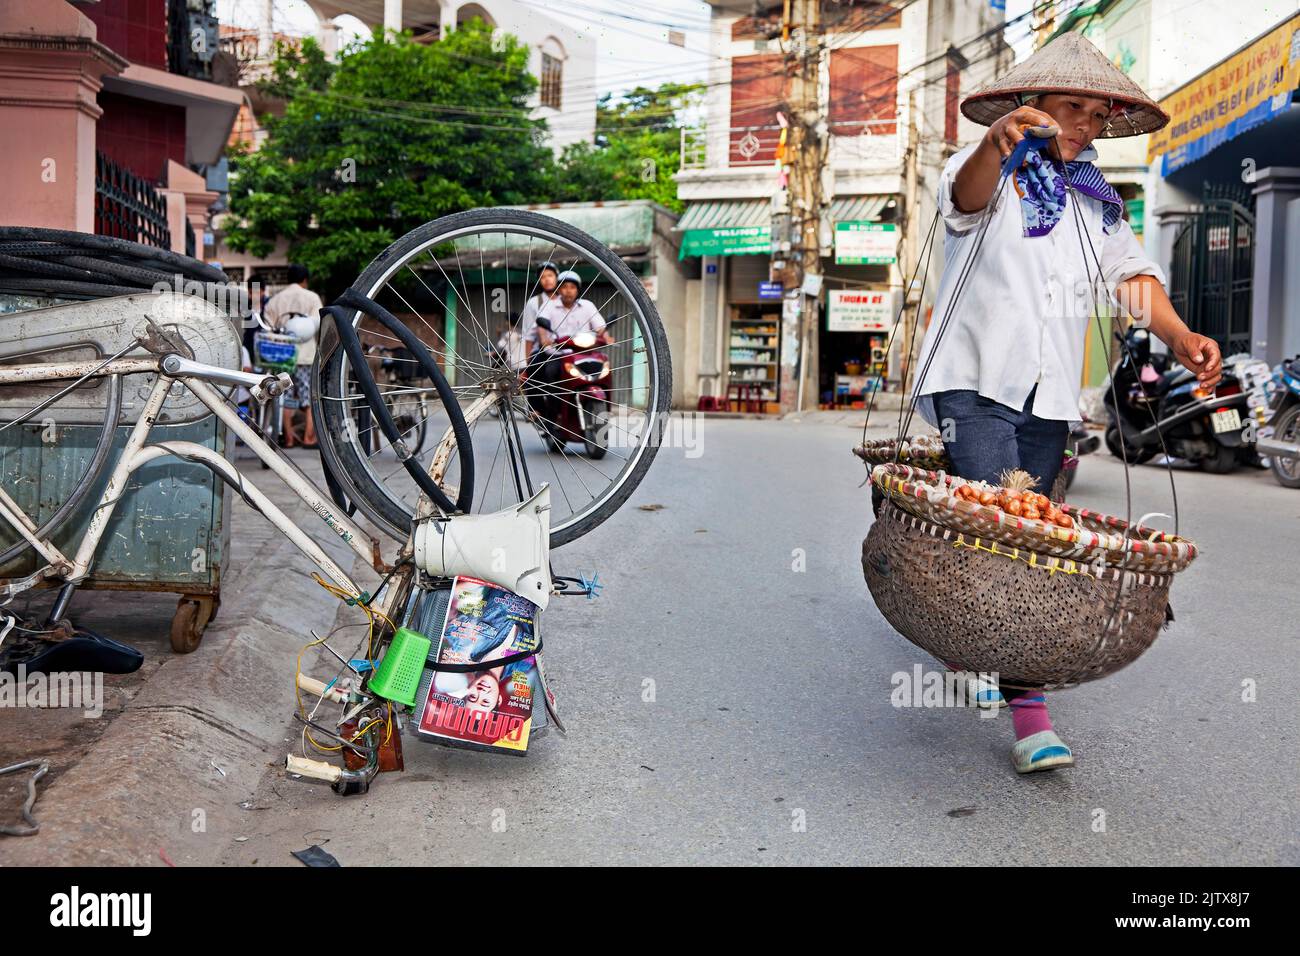 Vietnamese street vendor carrying pannier baskets, and bicycle repair in the road, Hai Phong, Vietnam Stock Photo